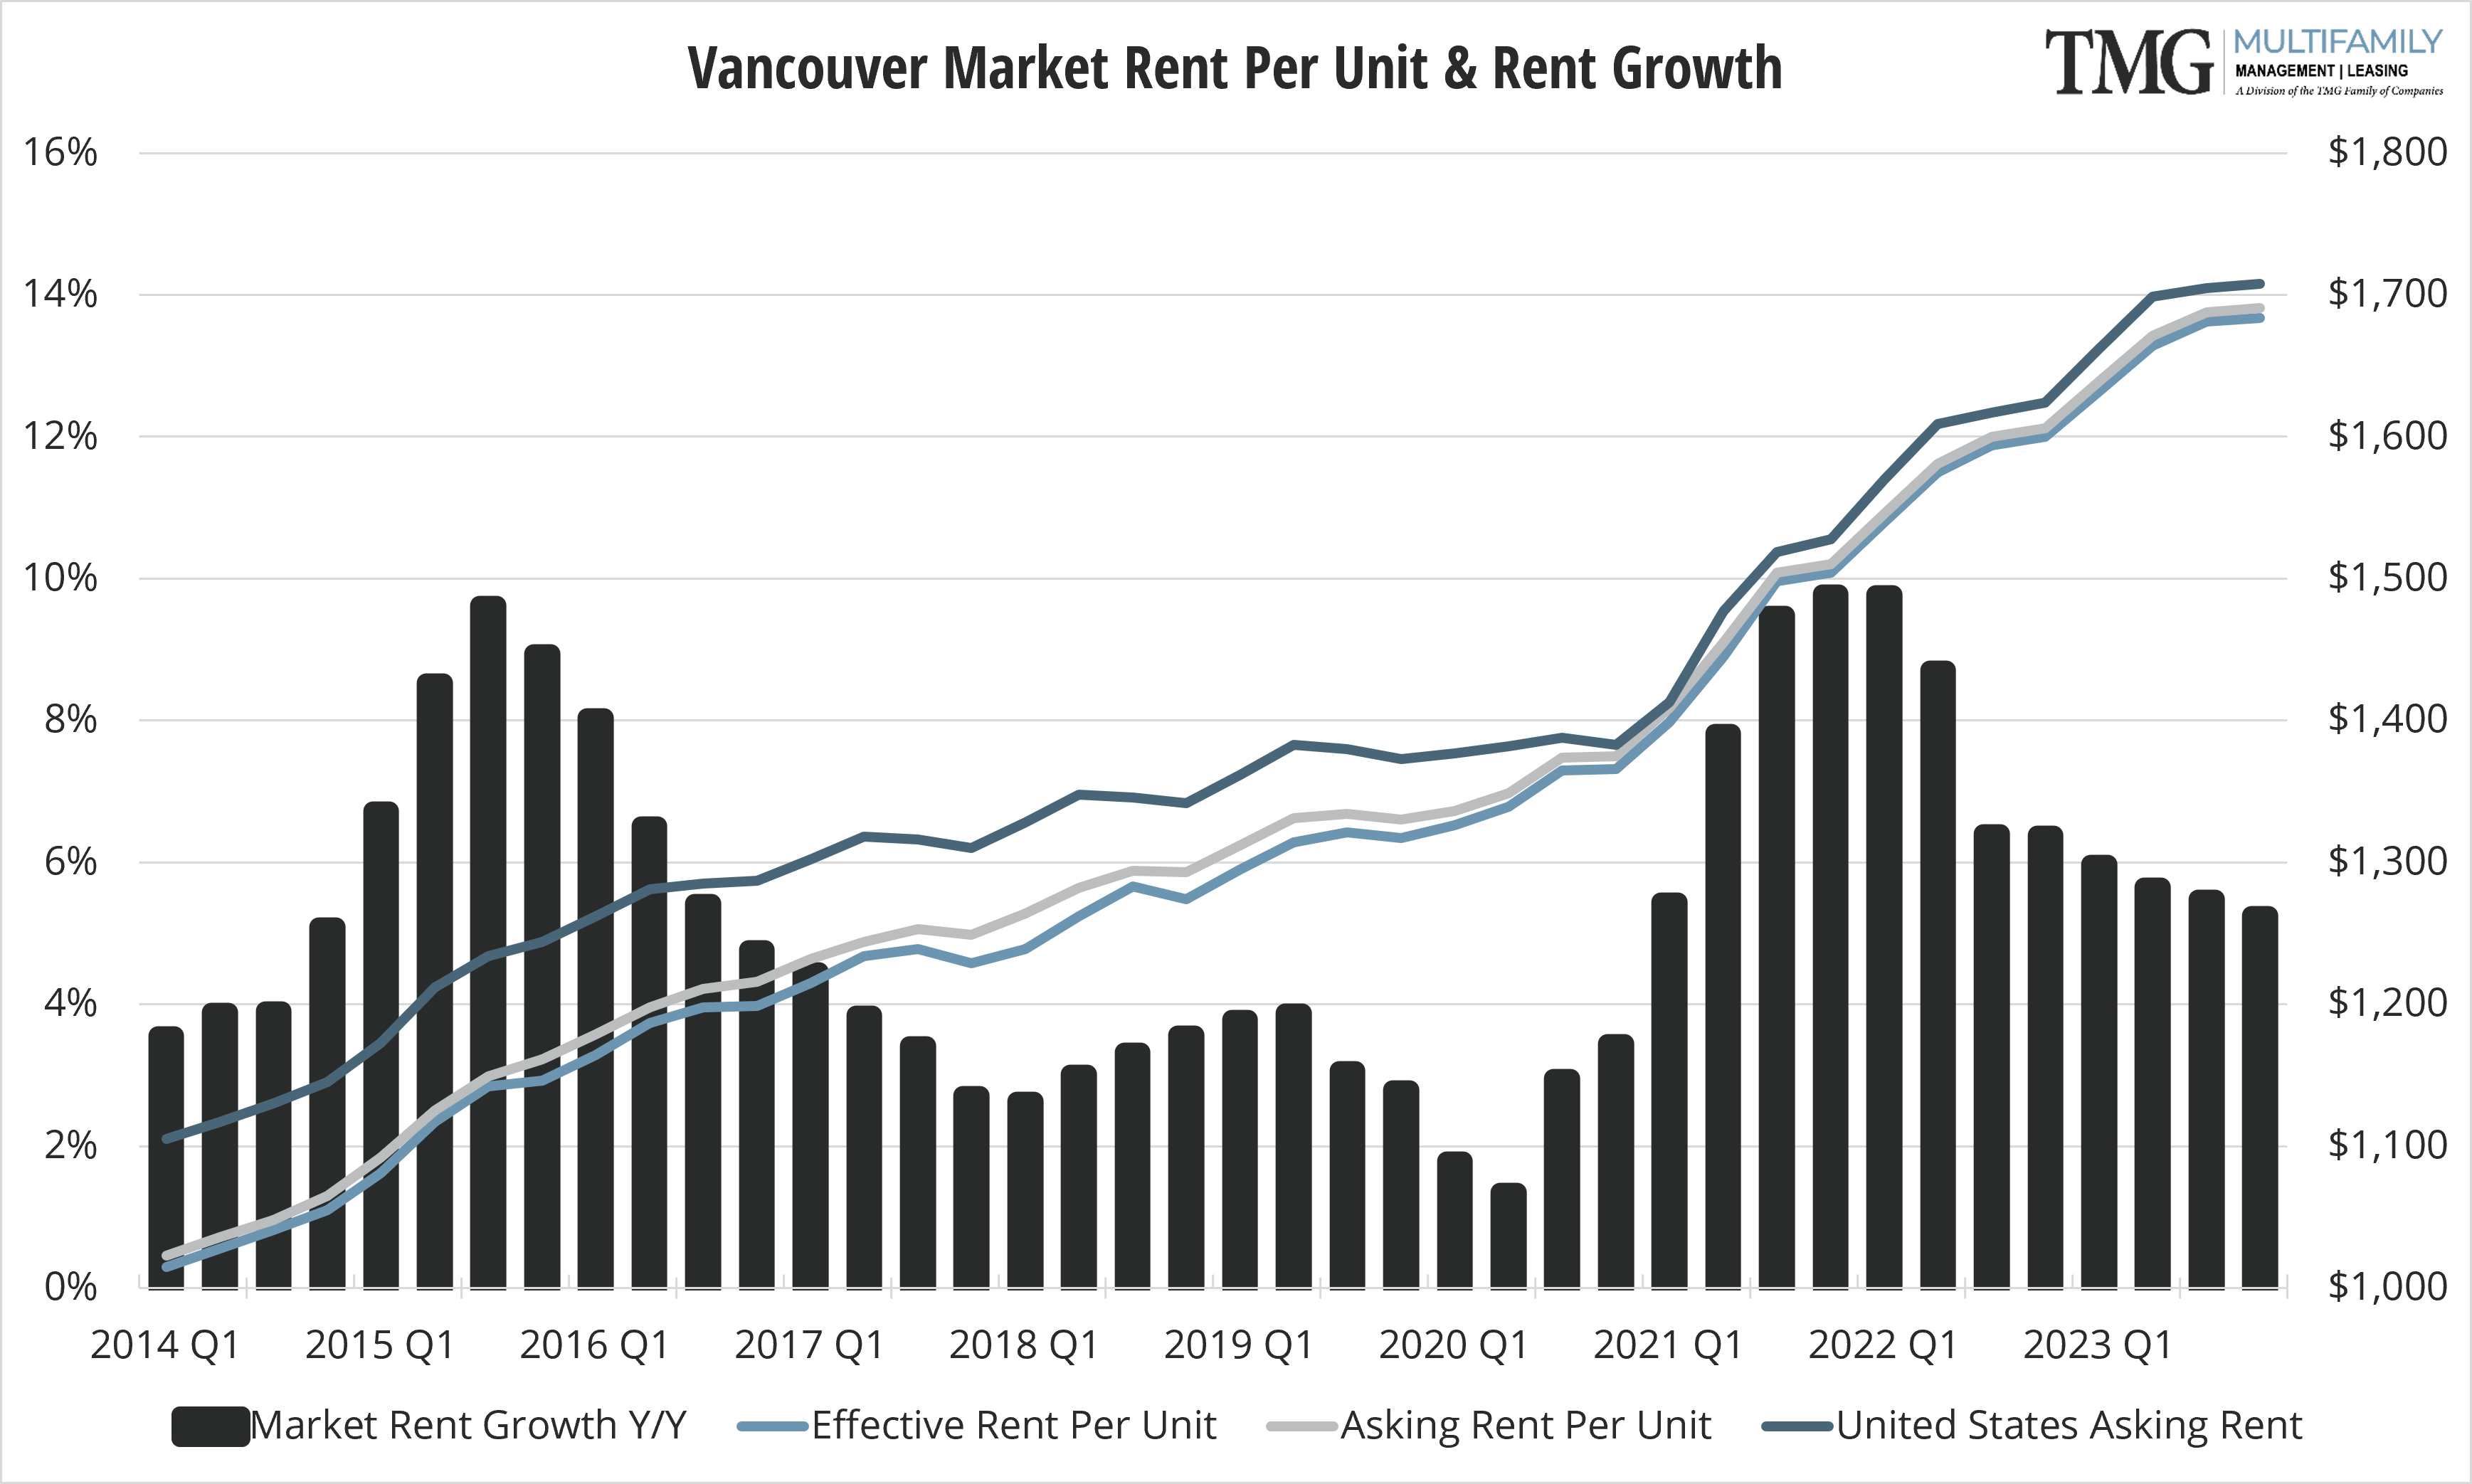 Vancouver Q4 Market Rent Per Unit and Rent Growth